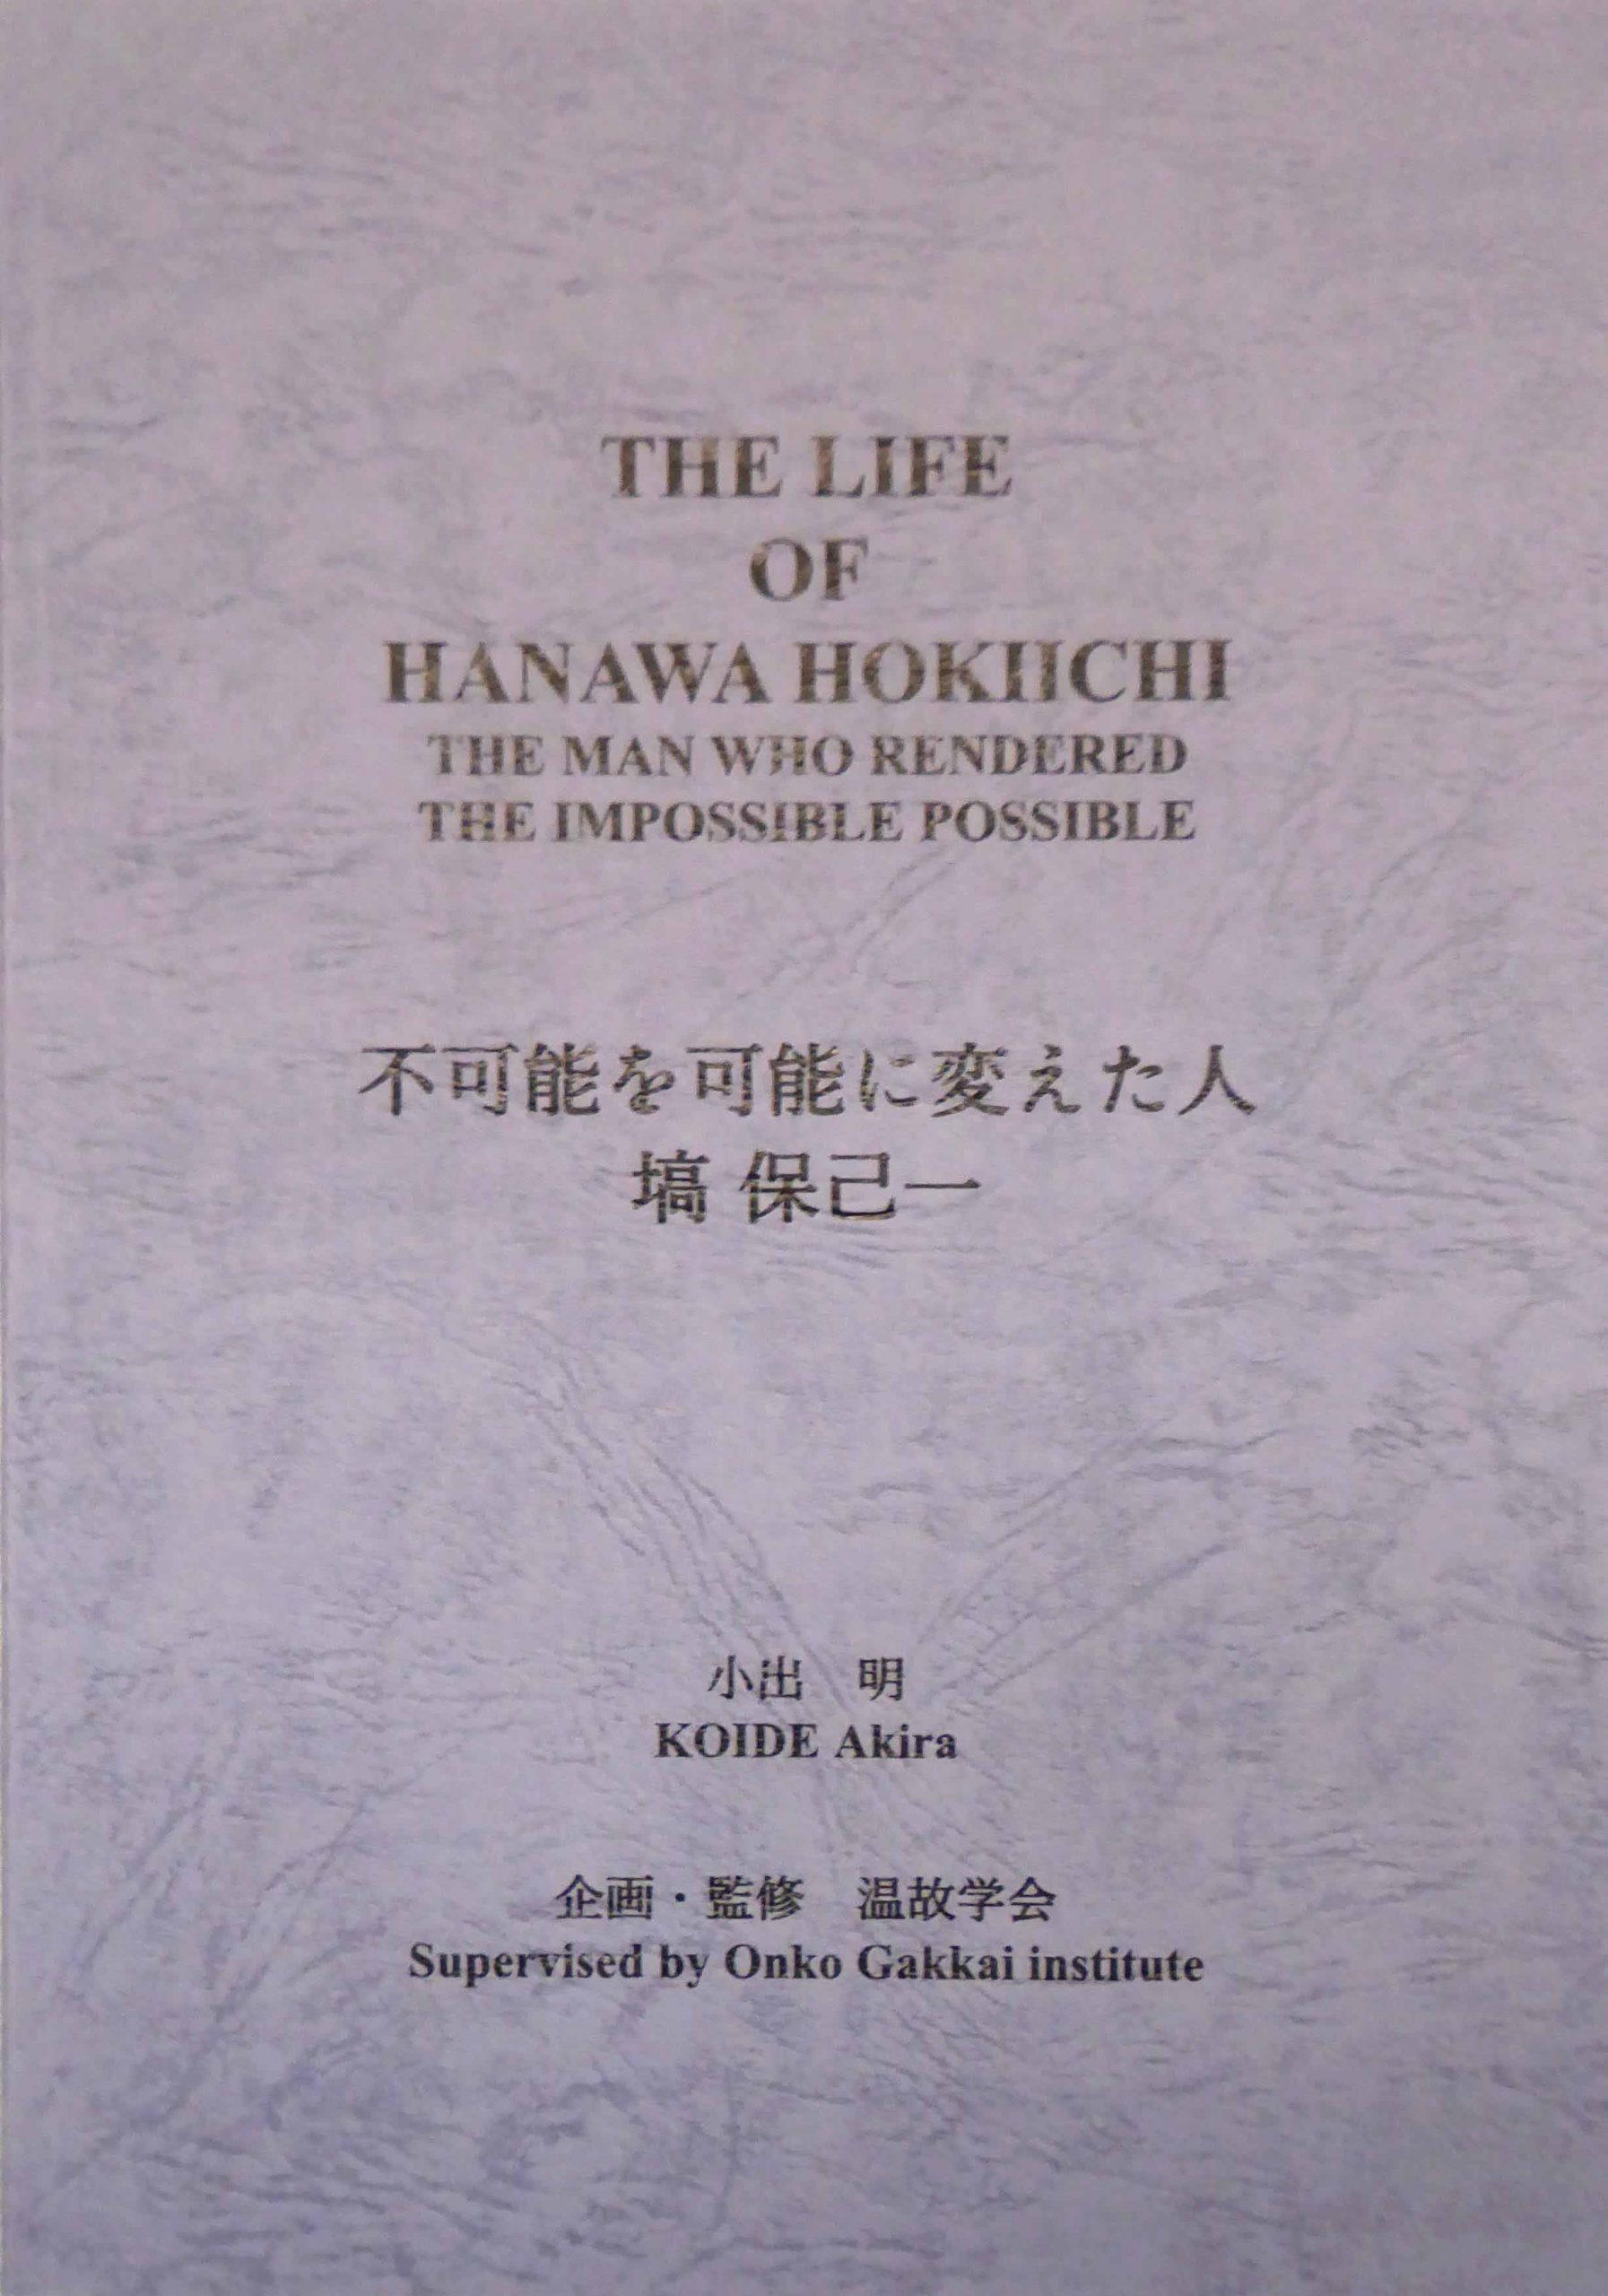 THE LIFE OF HANAWA HOKIICHI